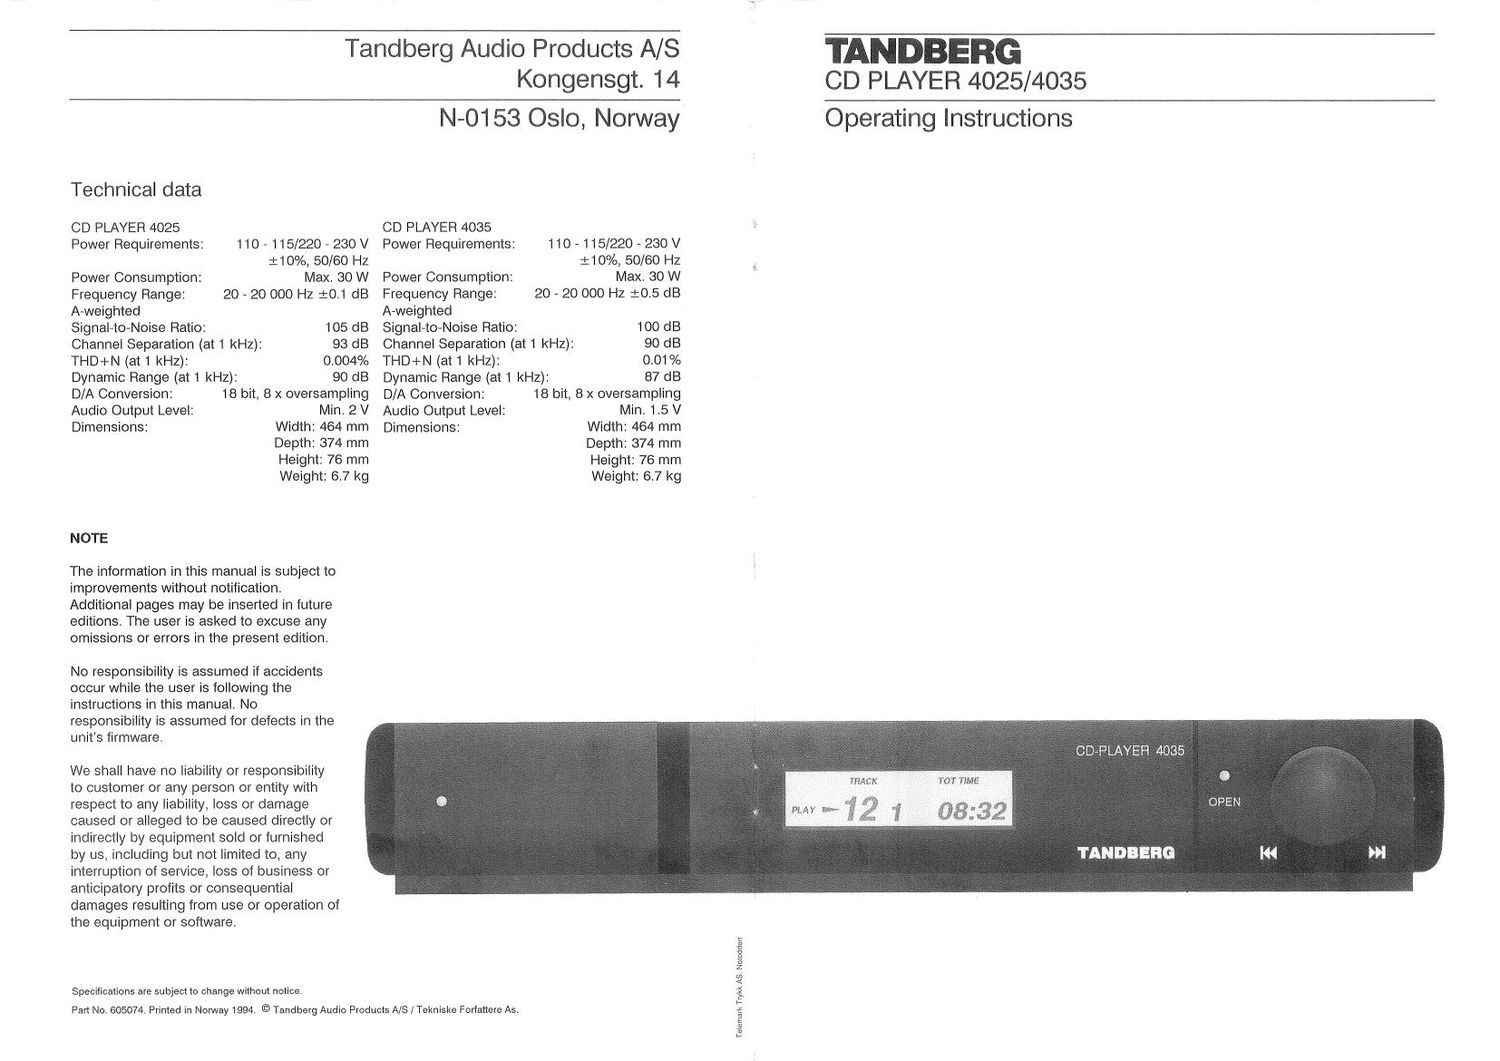 Tandberg TCP 4035 Owners Manual